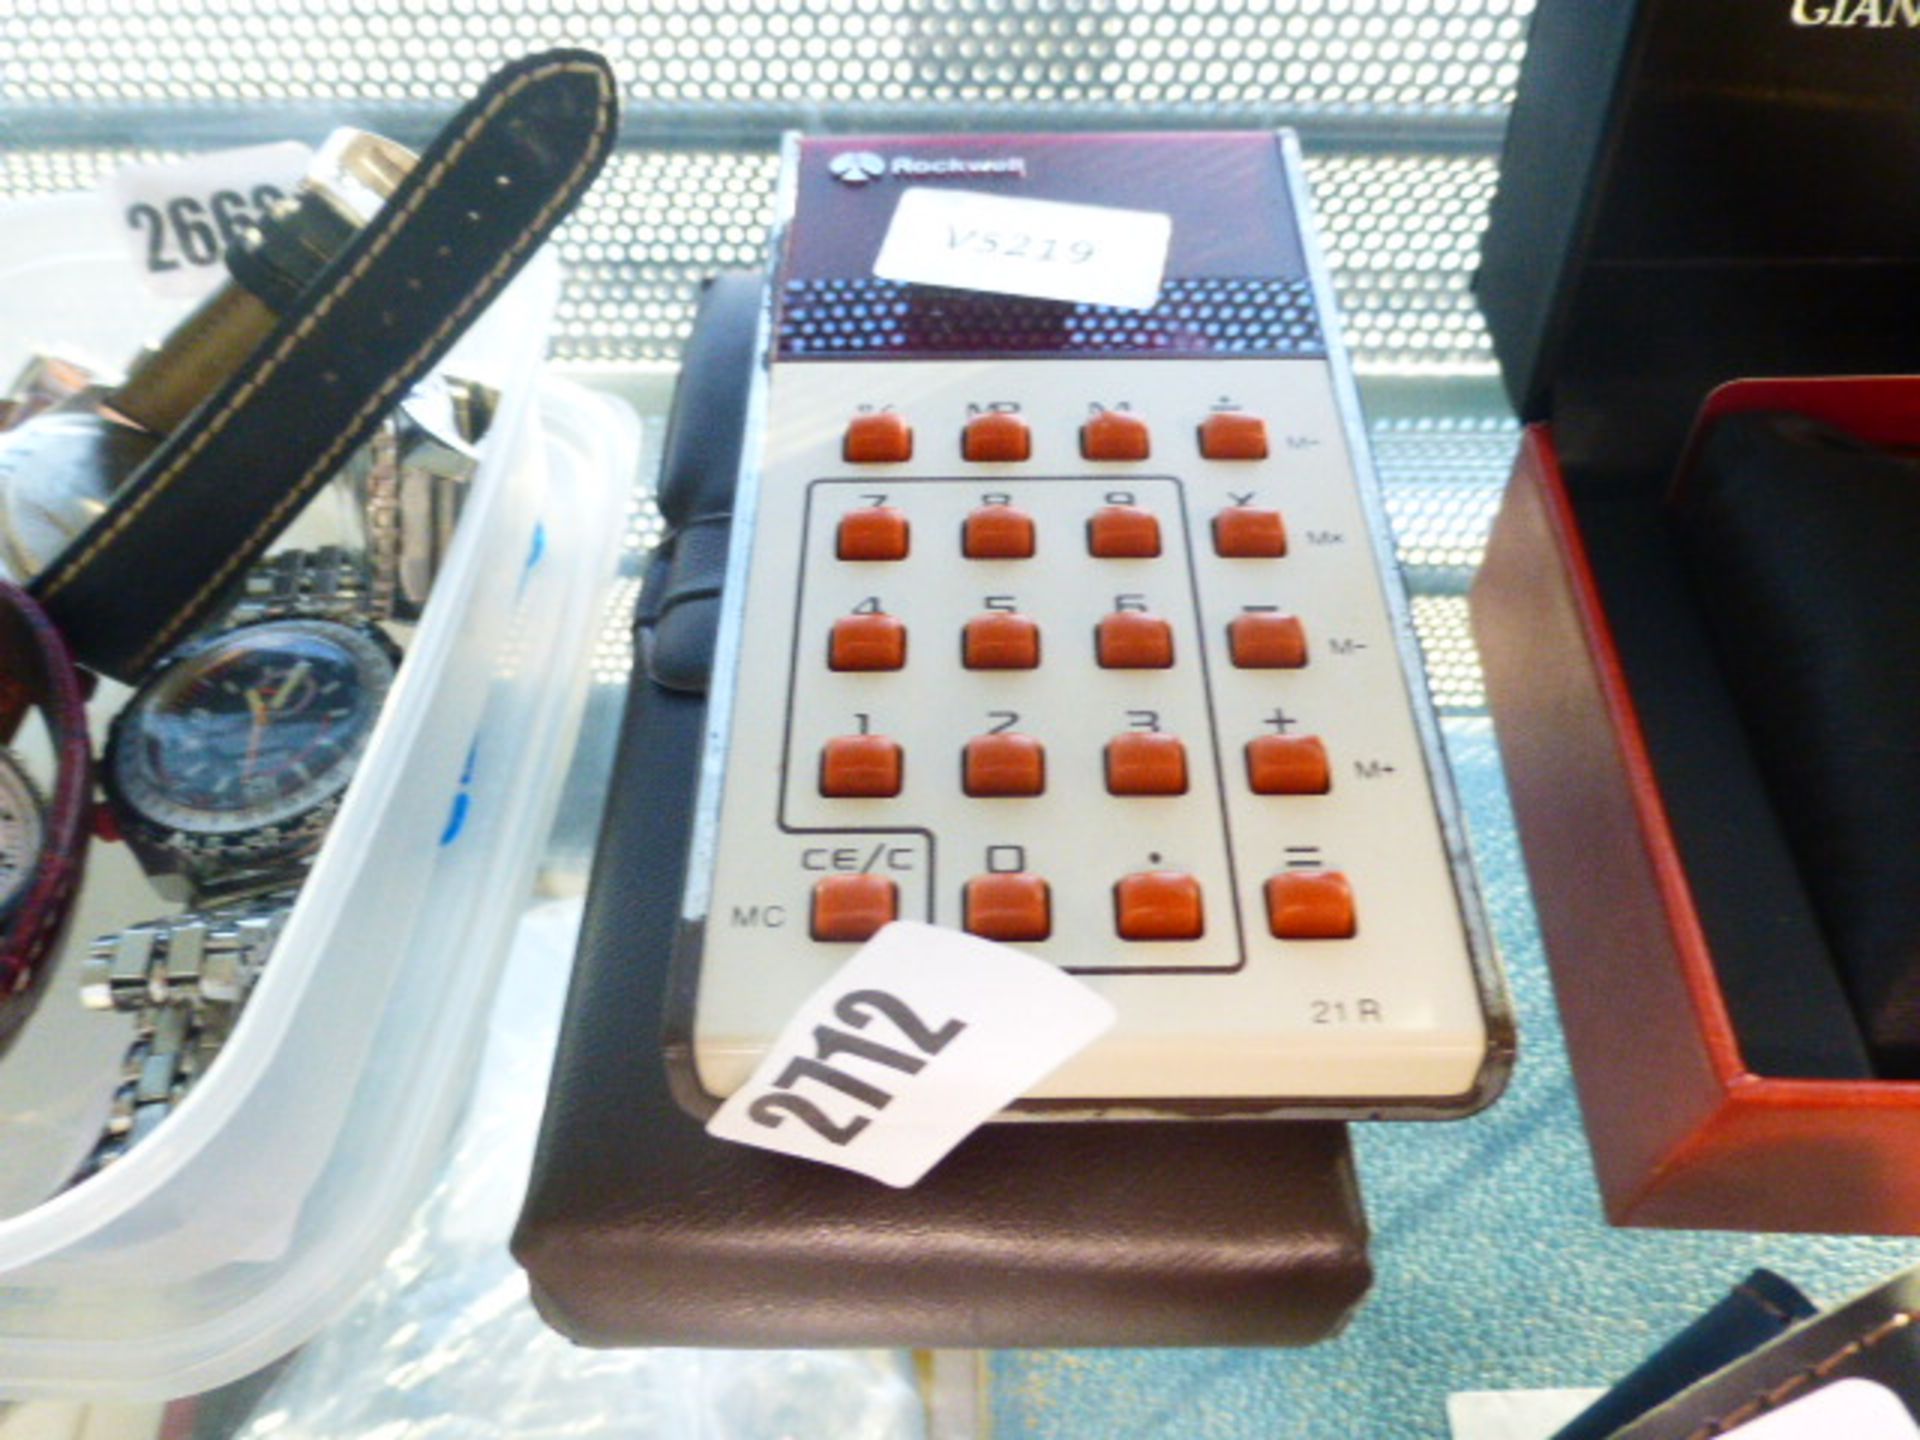 Rockwell calculator